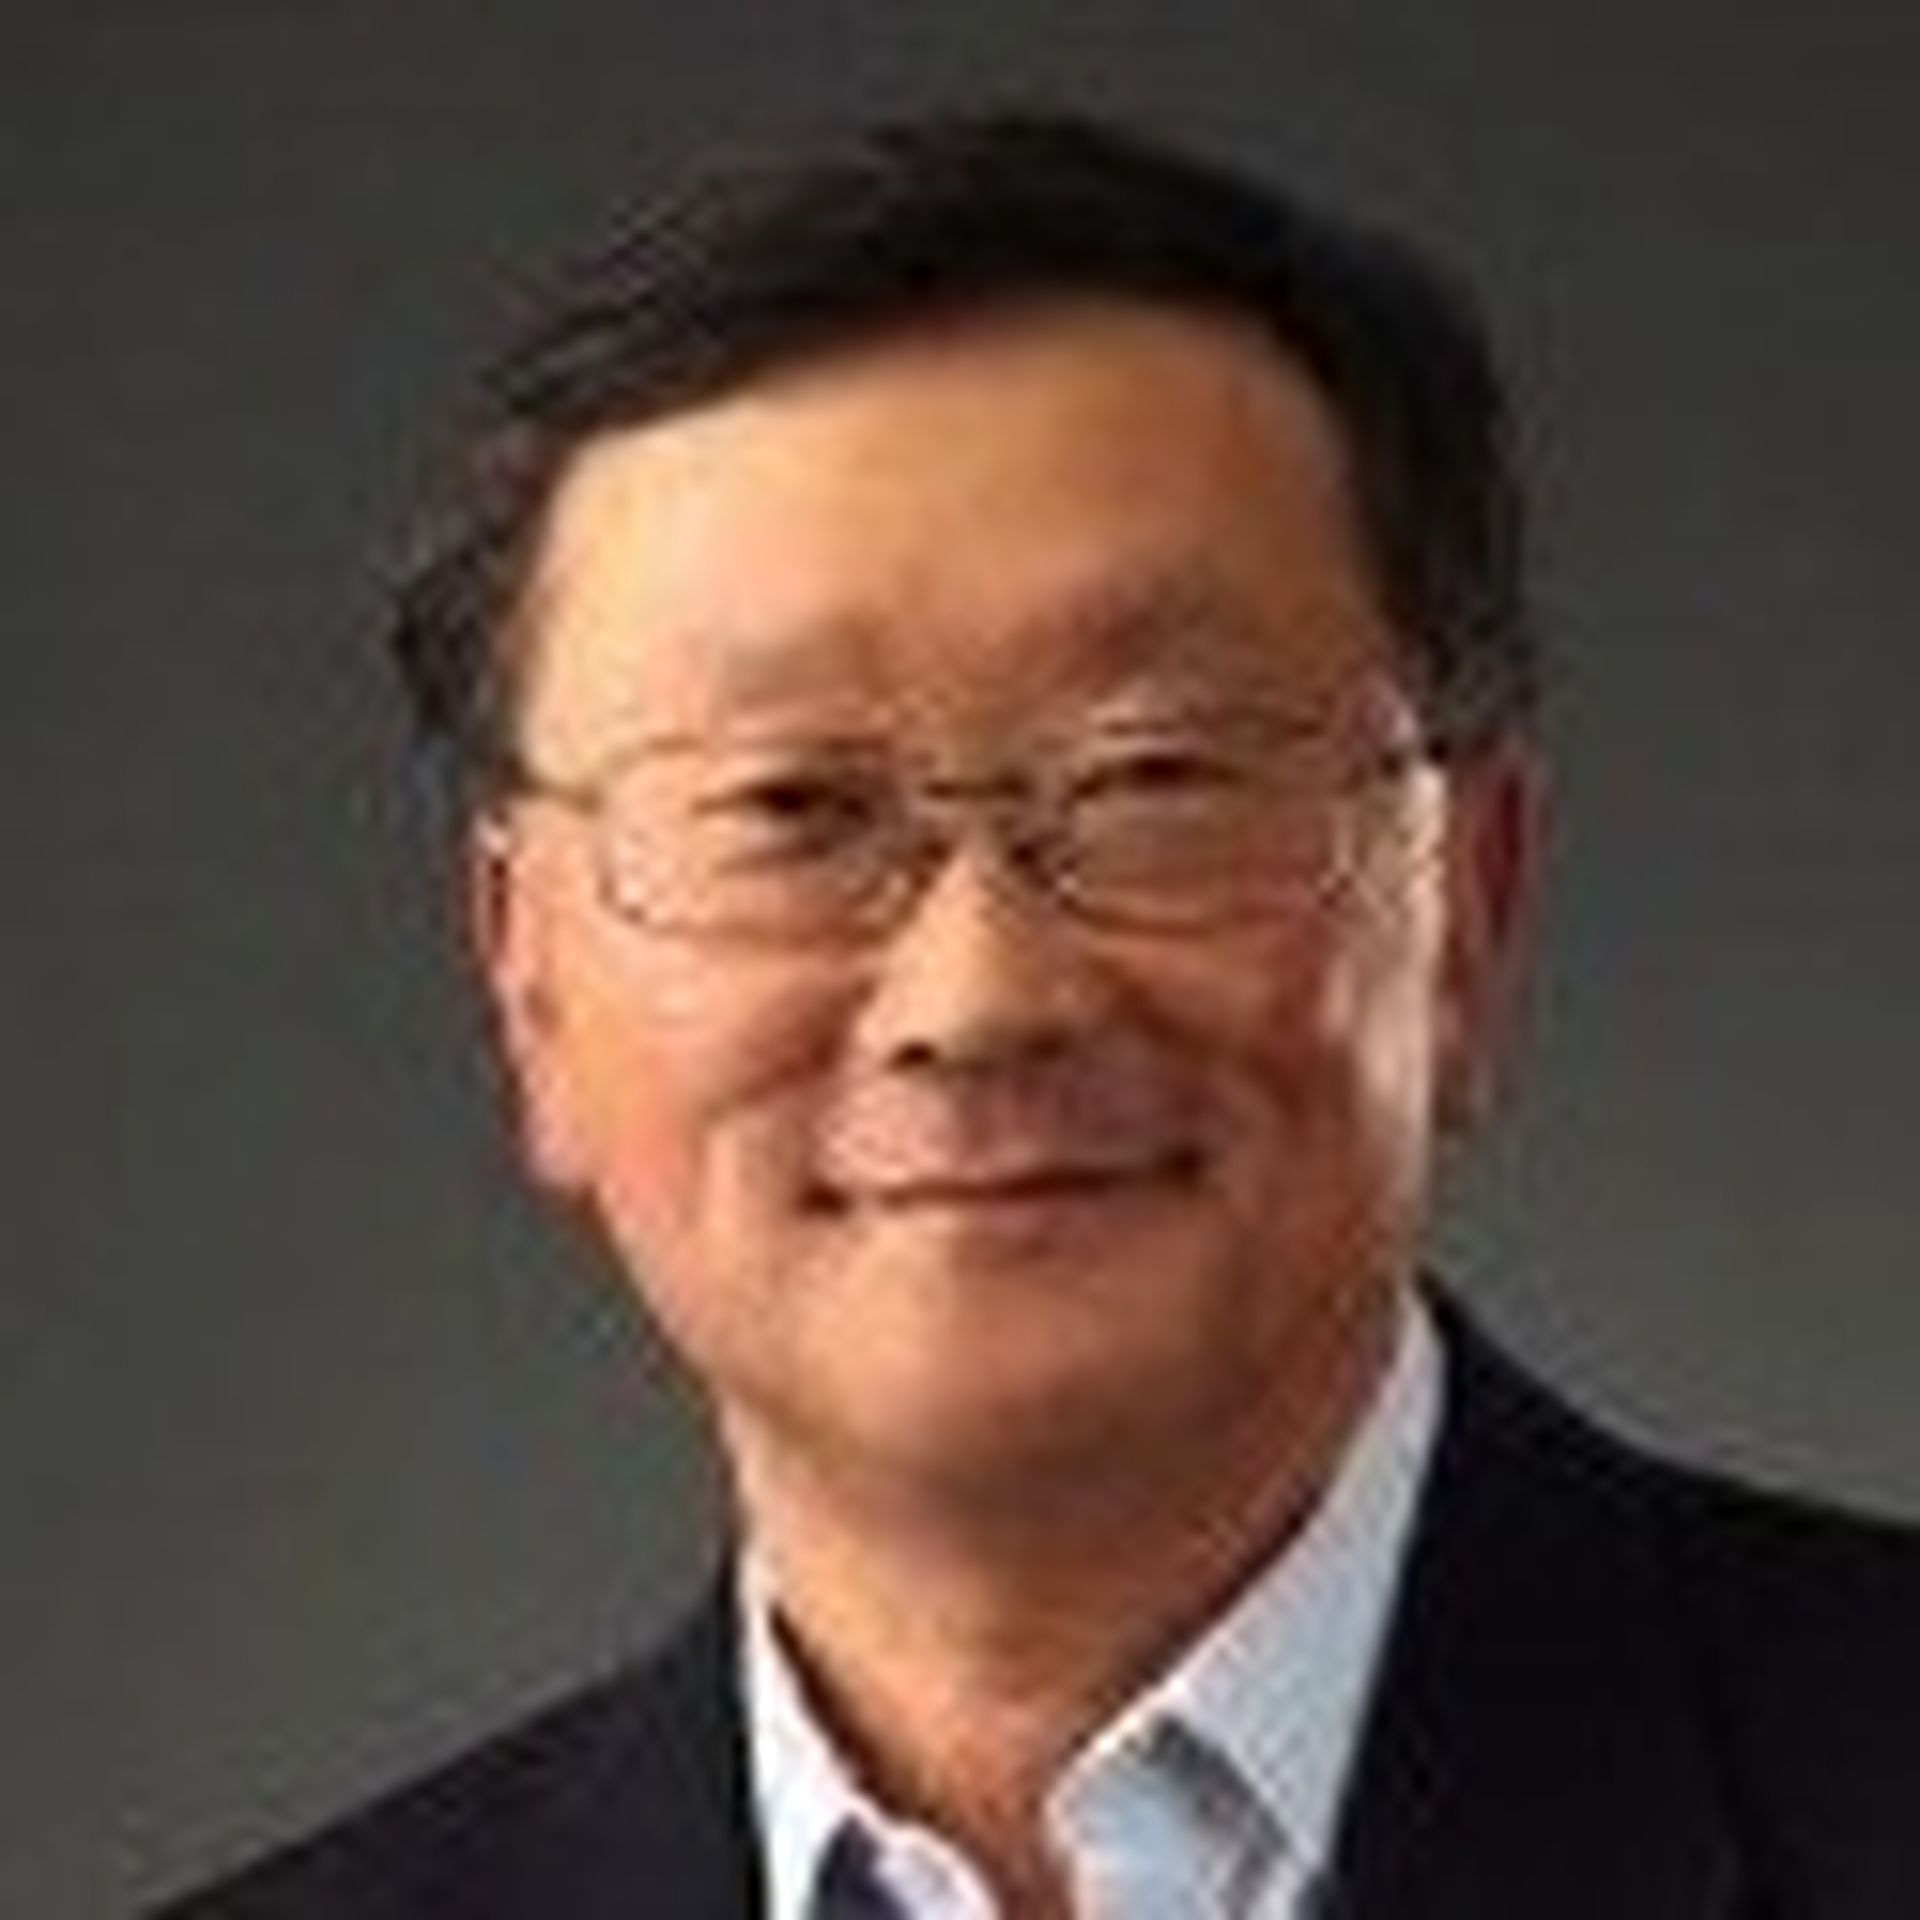 John Chen, CEO, BlackBerry